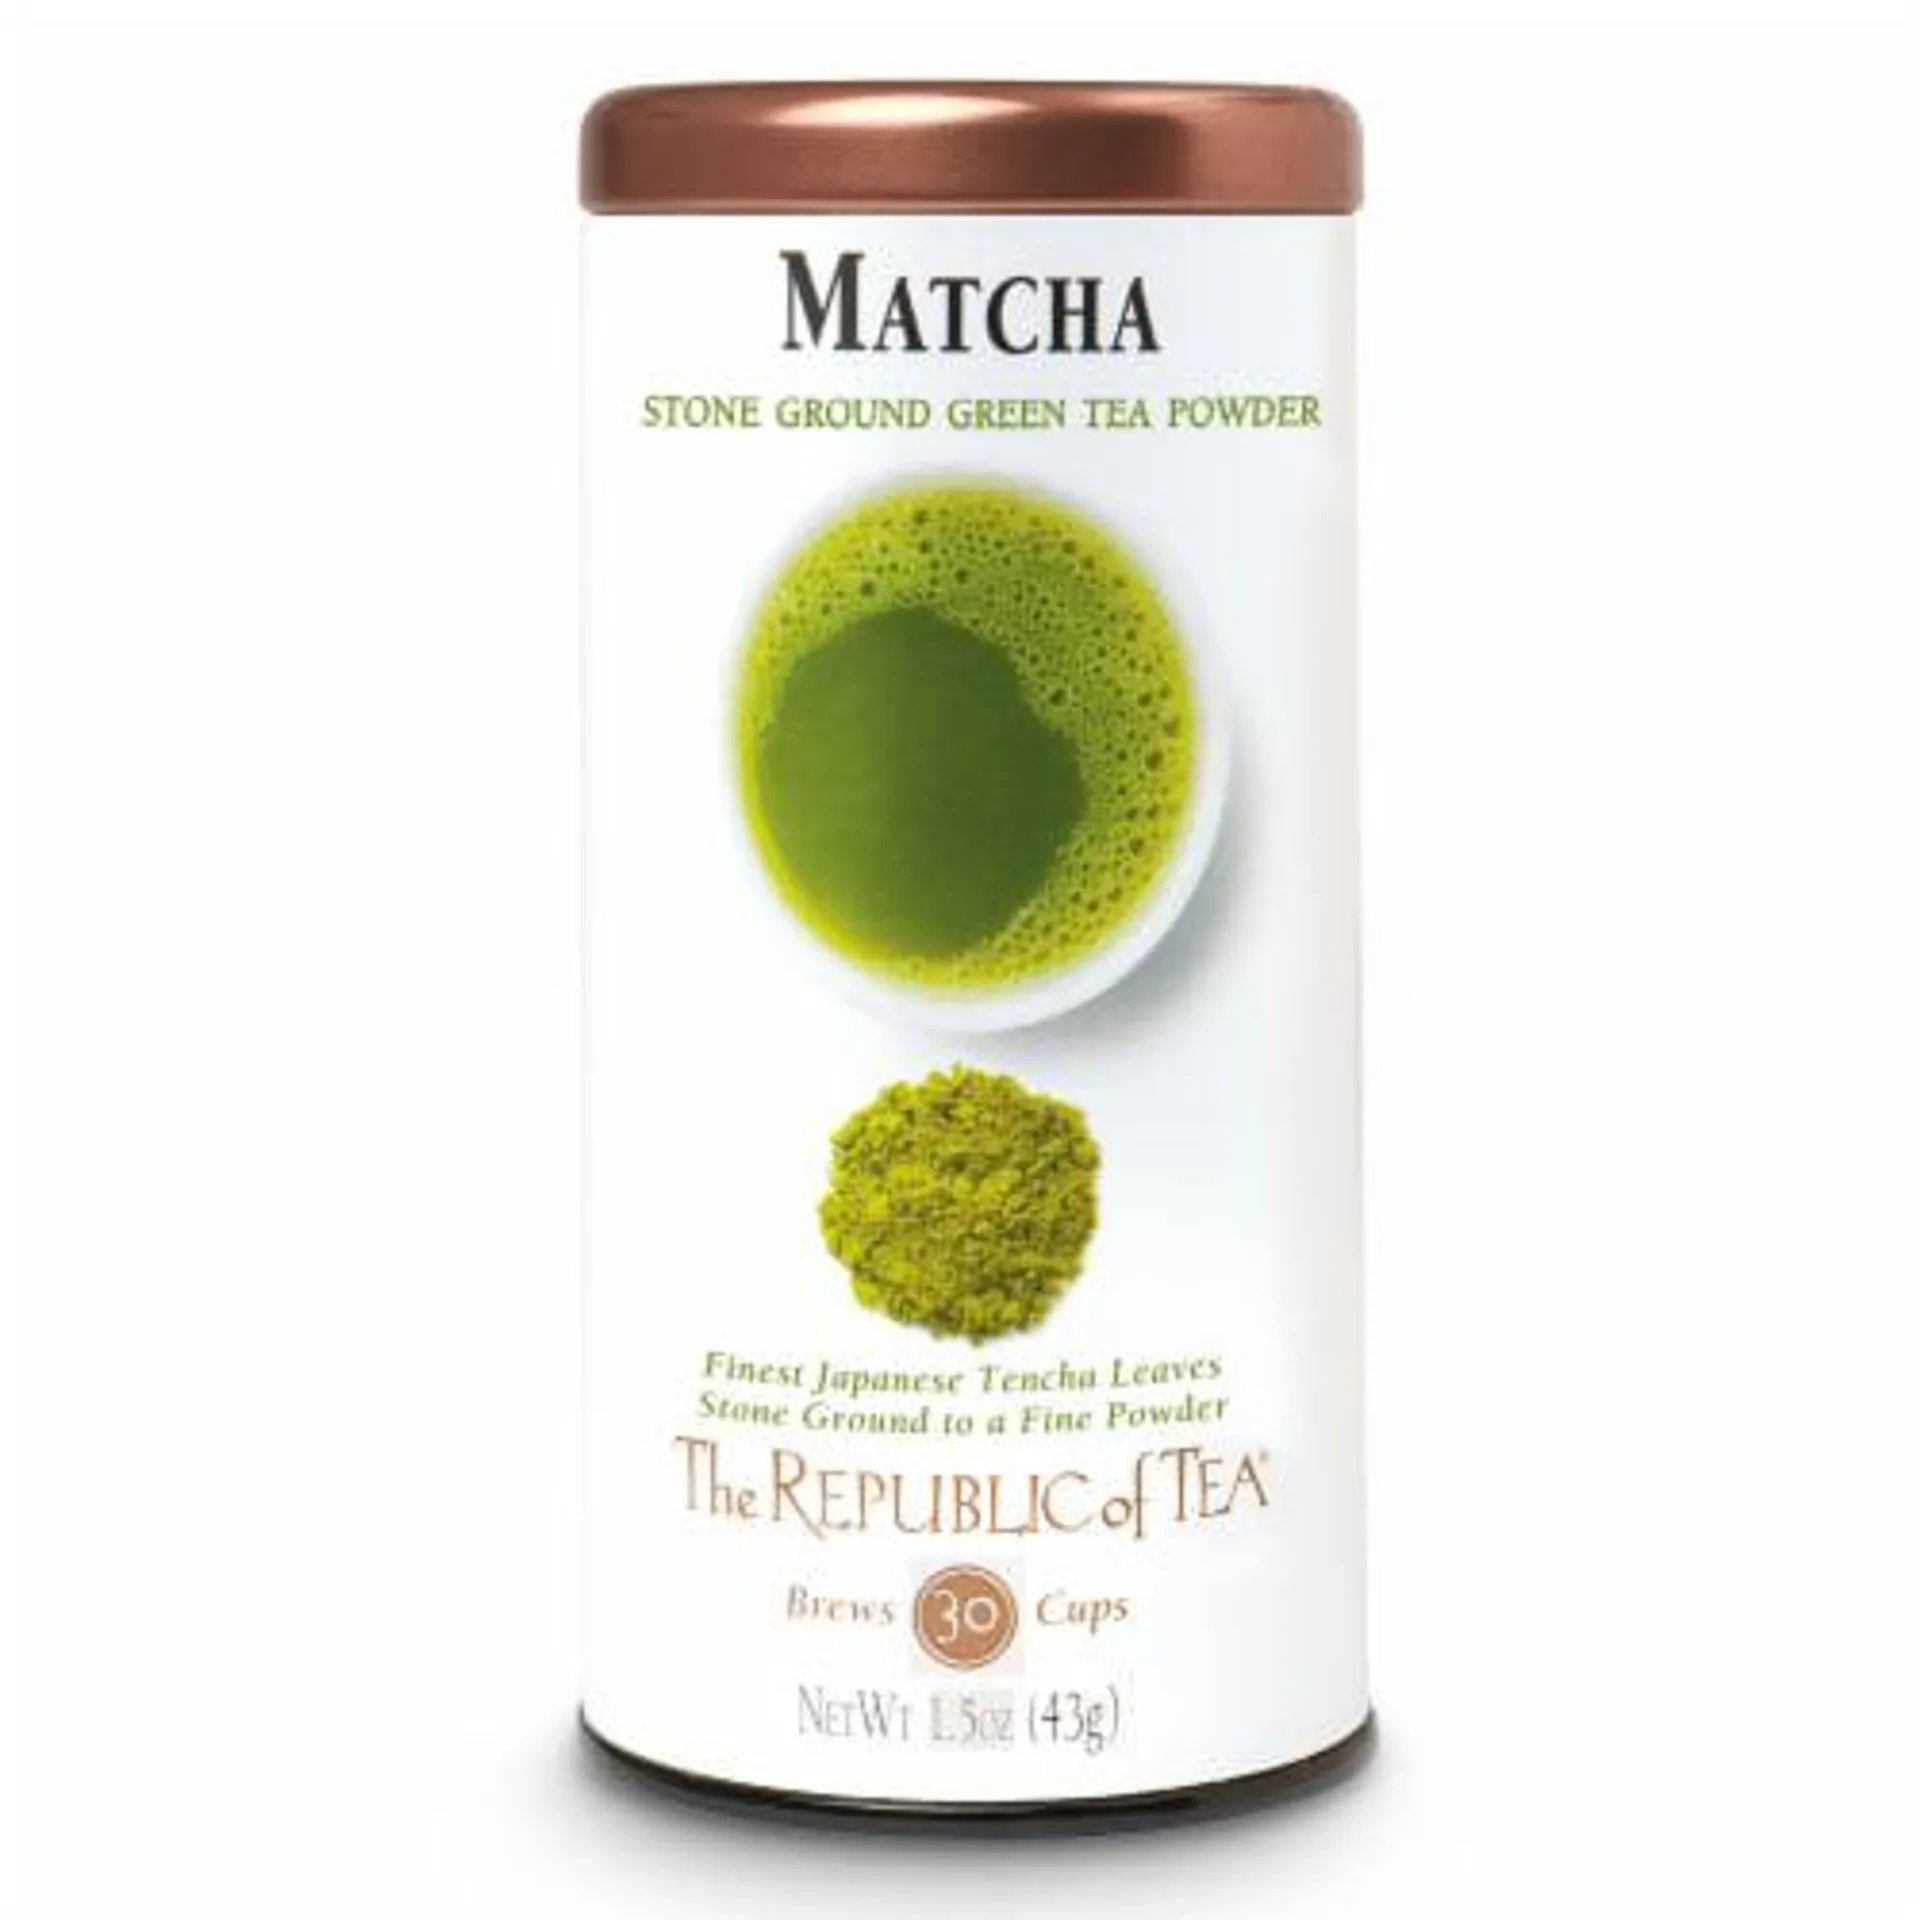 The Republic of Tea® Matcha Stone Ground Green Tea Powder